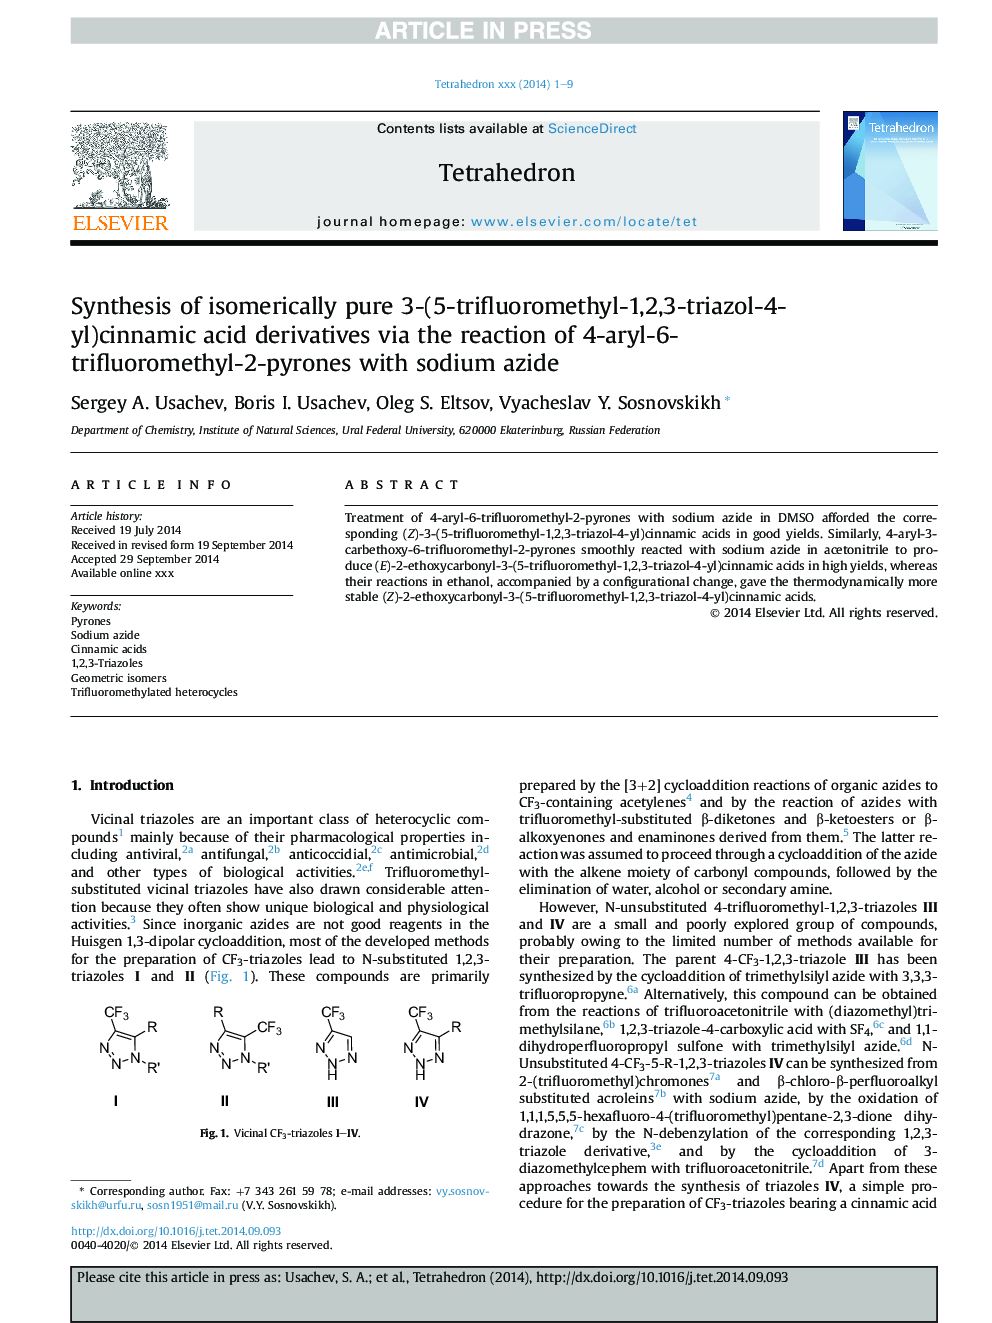 Synthesis of isomerically pure 3-(5-trifluoromethyl-1,2,3-triazol-4-yl)cinnamic acid derivatives via the reaction of 4-aryl-6-trifluoromethyl-2-pyrones with sodium azide